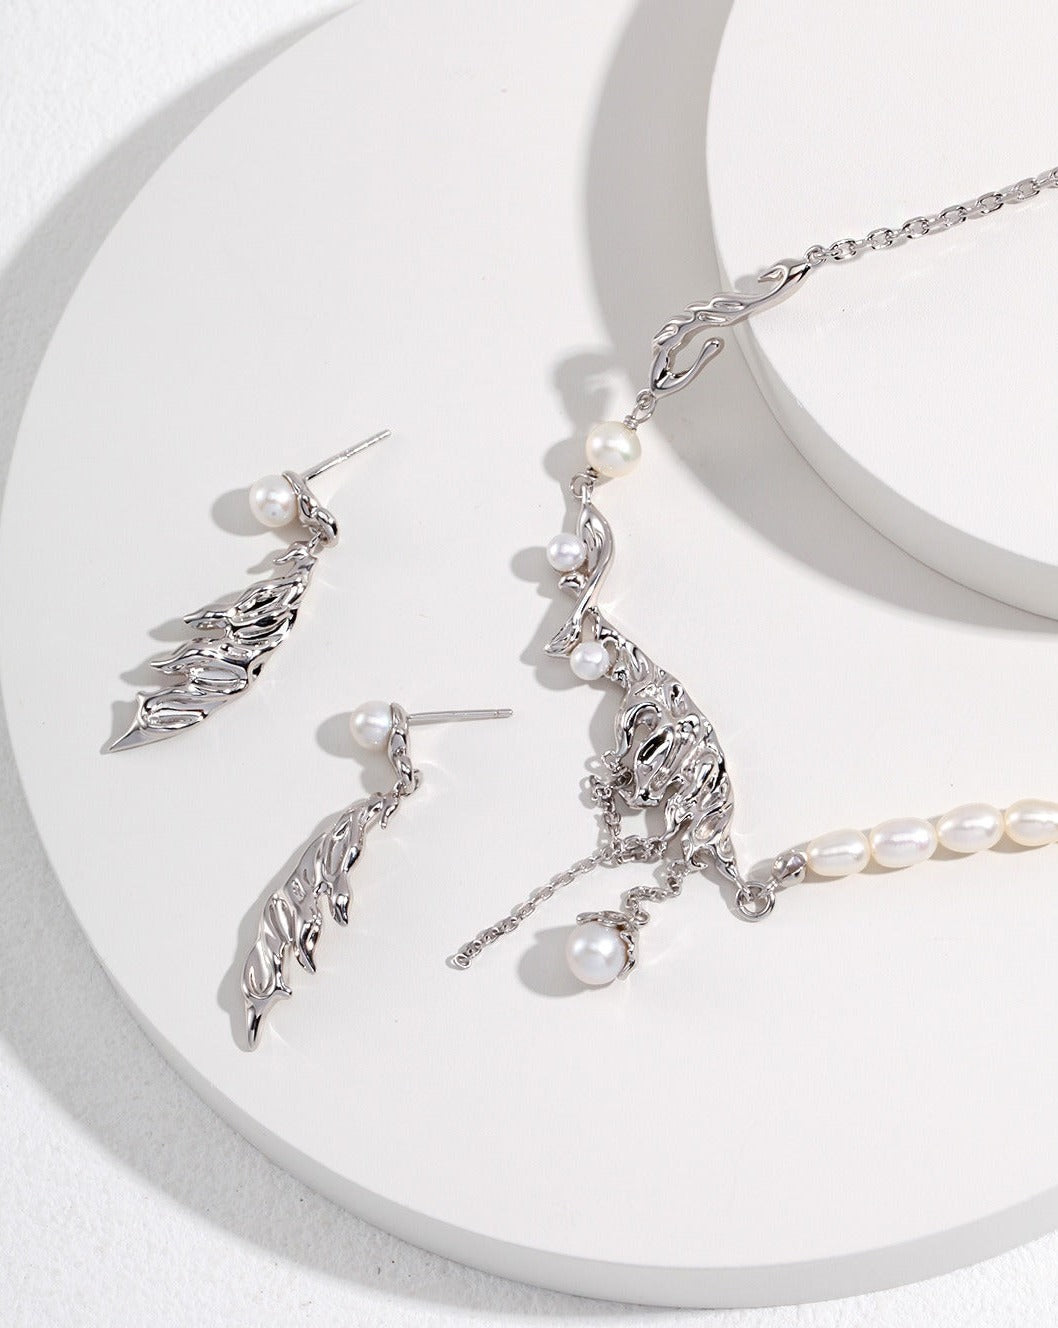 fashion-jewelry-minimalist-jewelry-design-jewelry-statement-necklace-pearl-earring-bracelet-rings-gold-coated-silver-bijoux-feather-in-the-wind-pearl-earrings